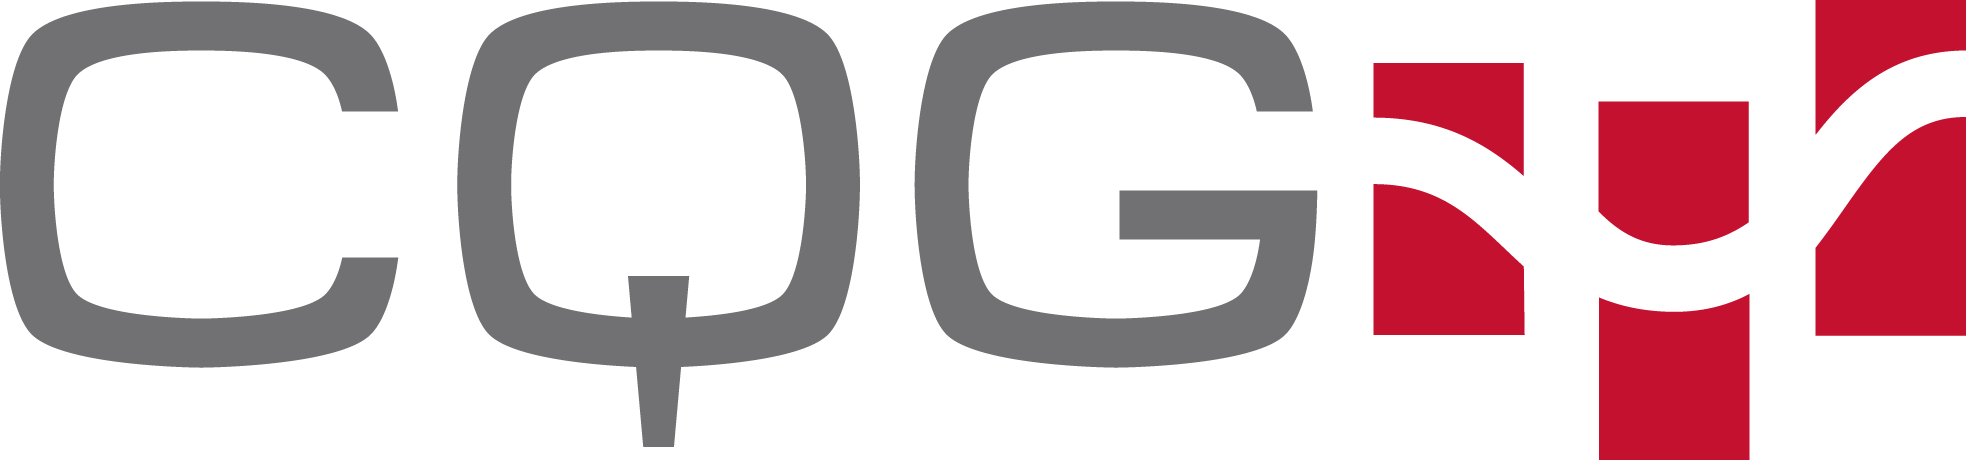 CQG_logo.png